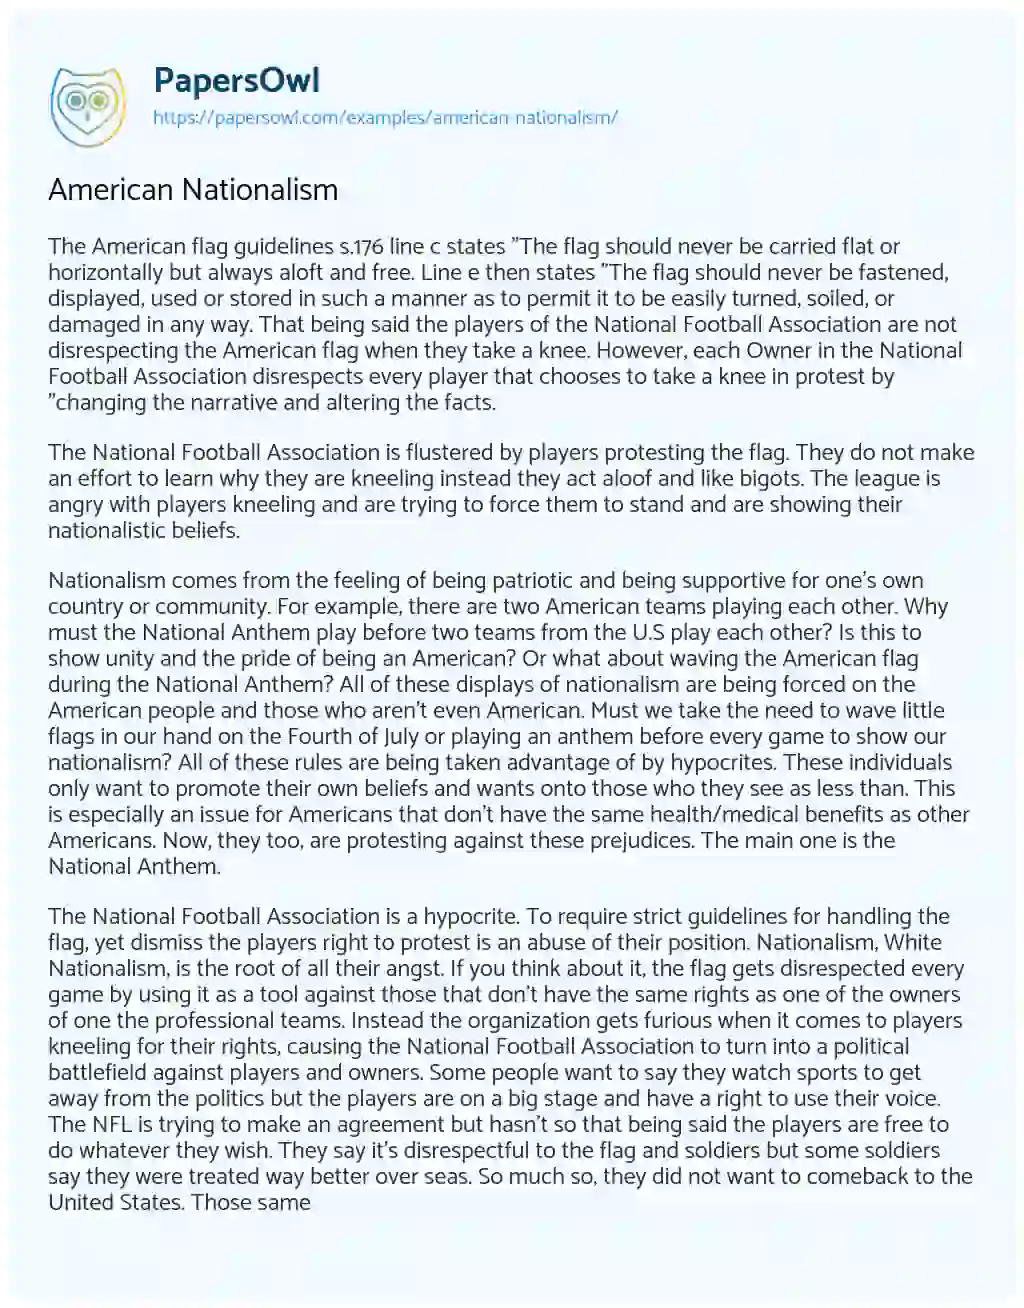 Essay on American Nationalism